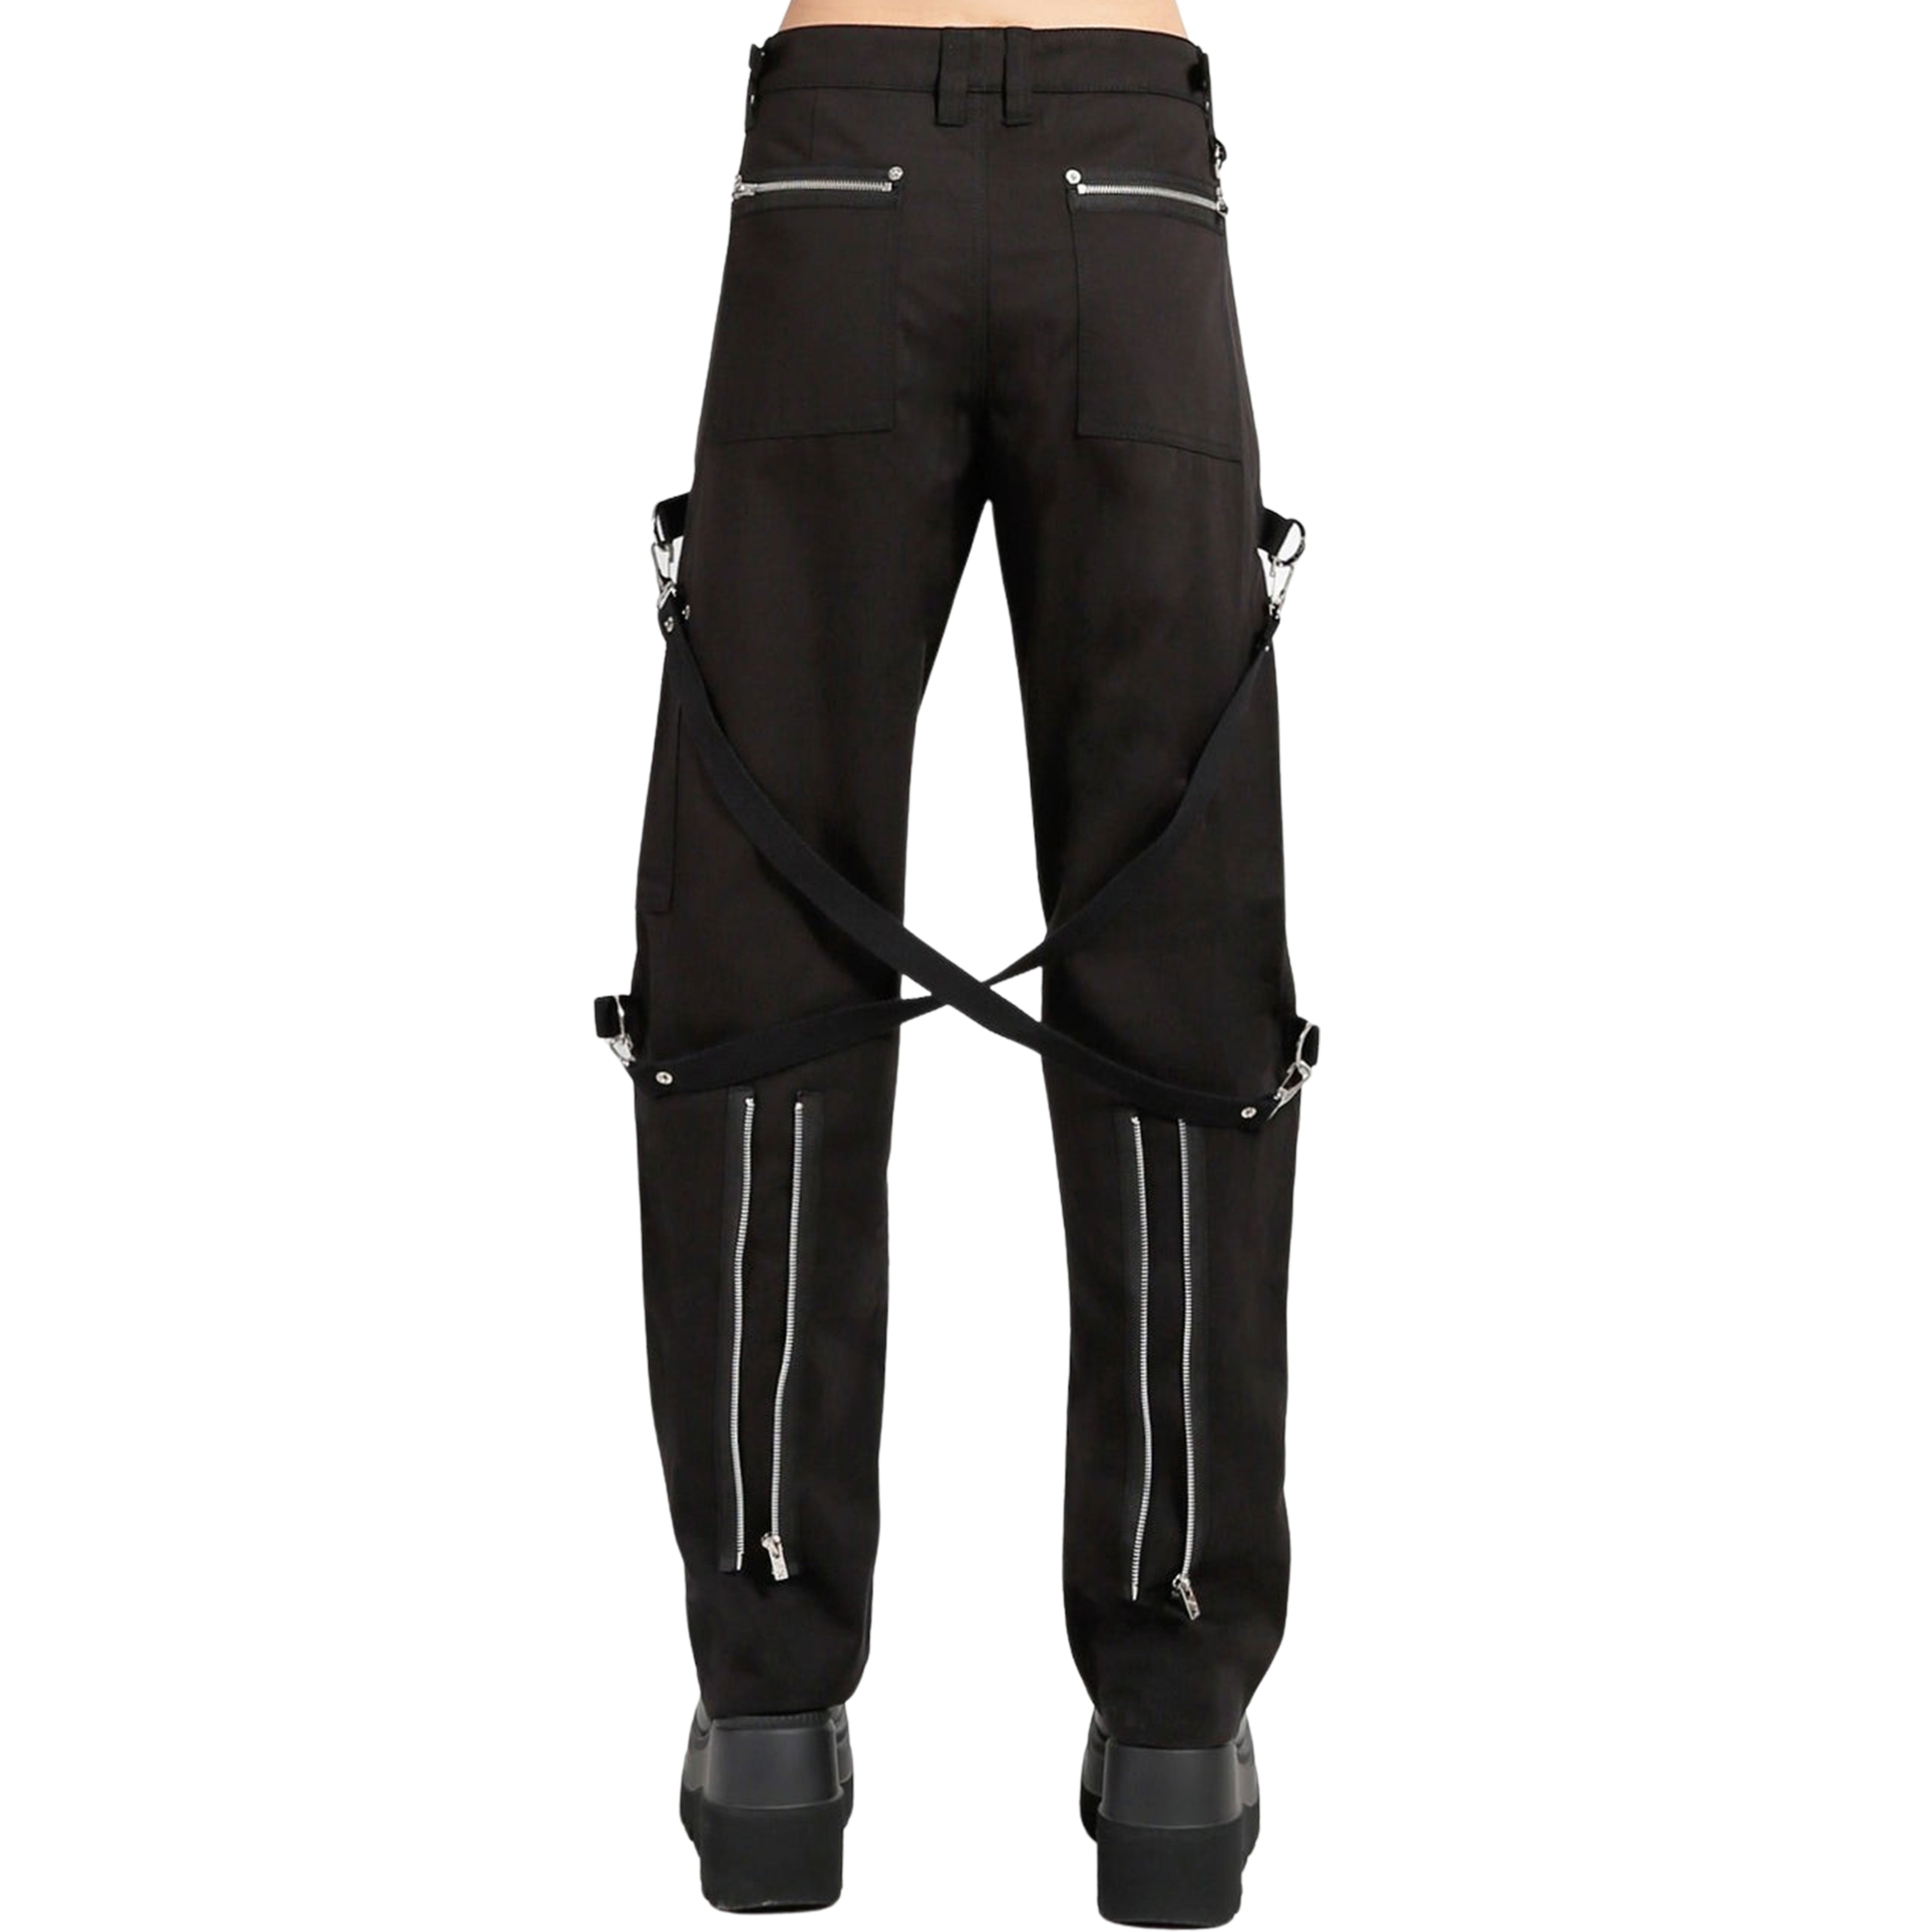 Punk Unisex ADJ Zipper Bottom Leg Bondage Pants